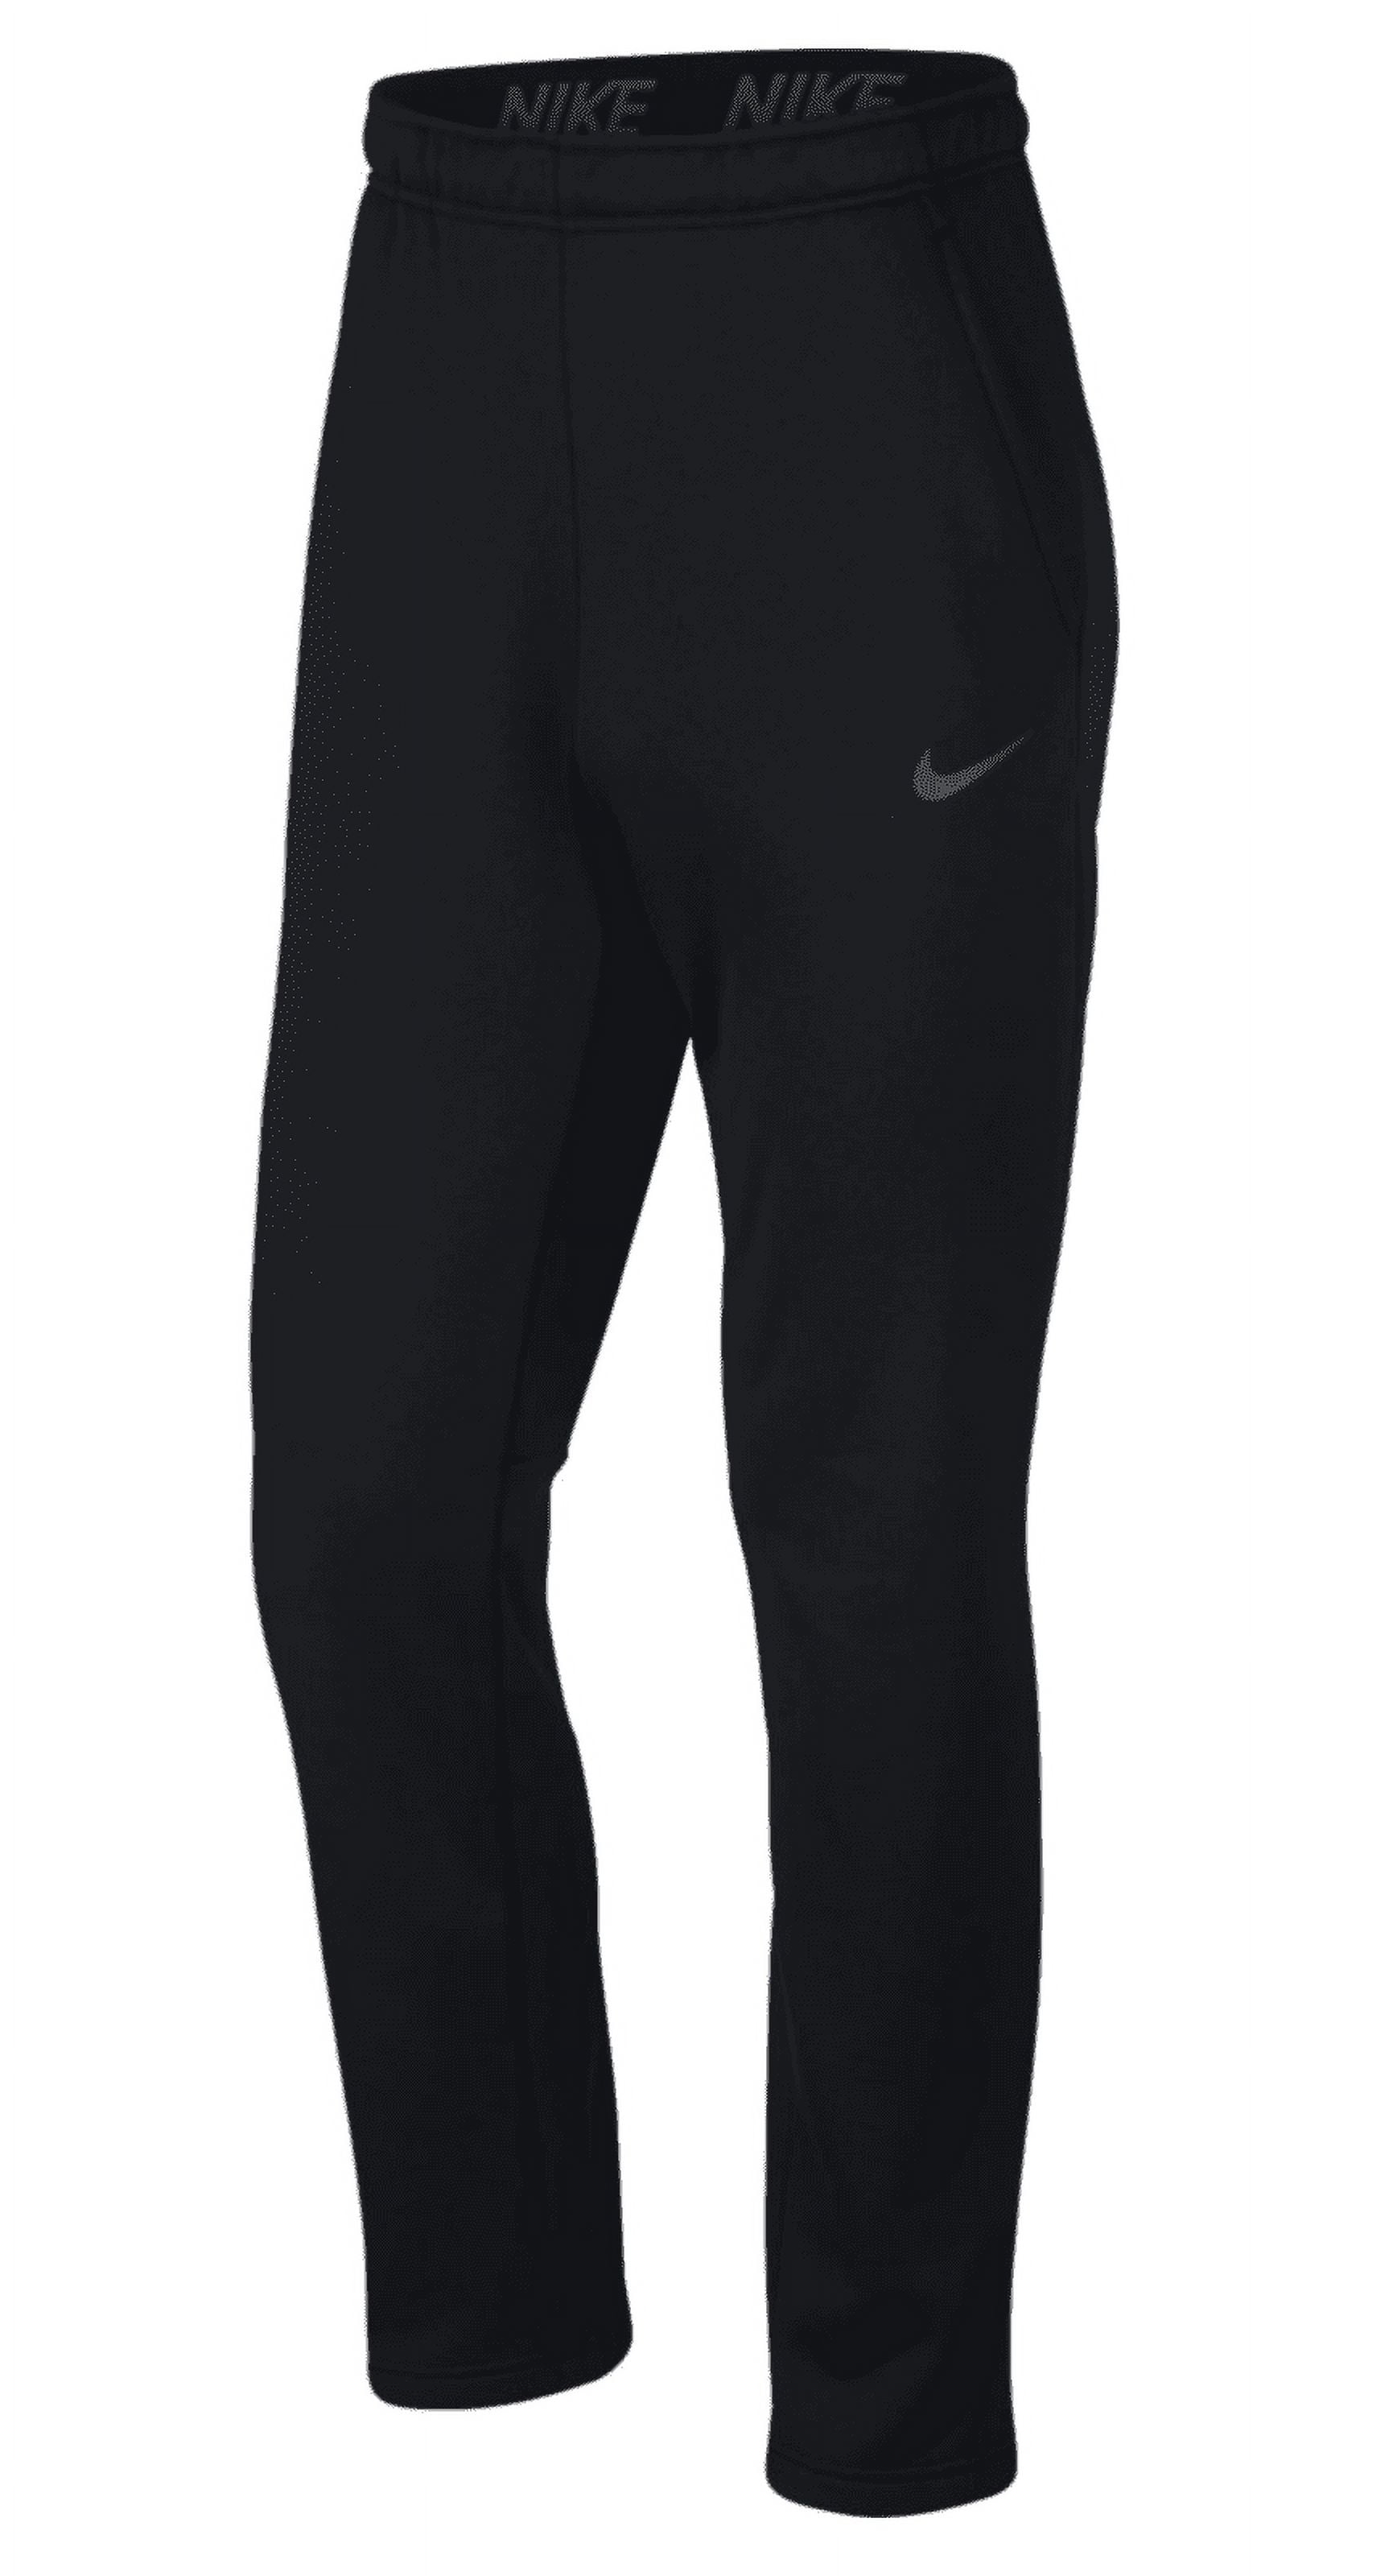 Nike Women's Therma Training Sweat Pants (Black, X-Small